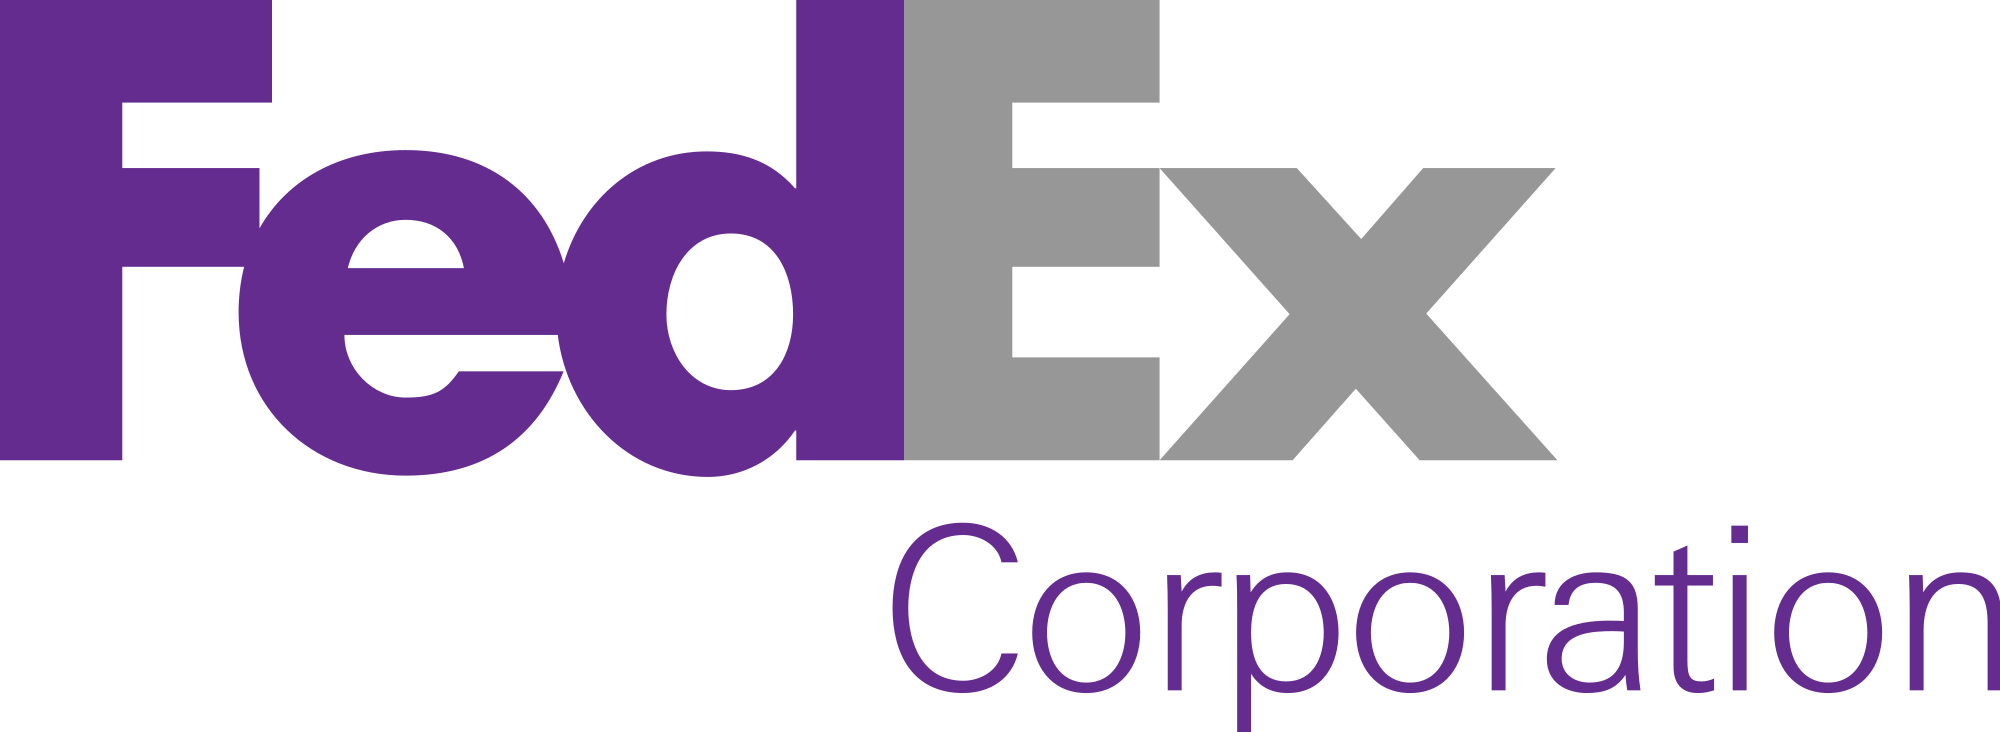 Purple Corporate Logo - File:FedEx Corporation logo.svg - Wikimedia Commons